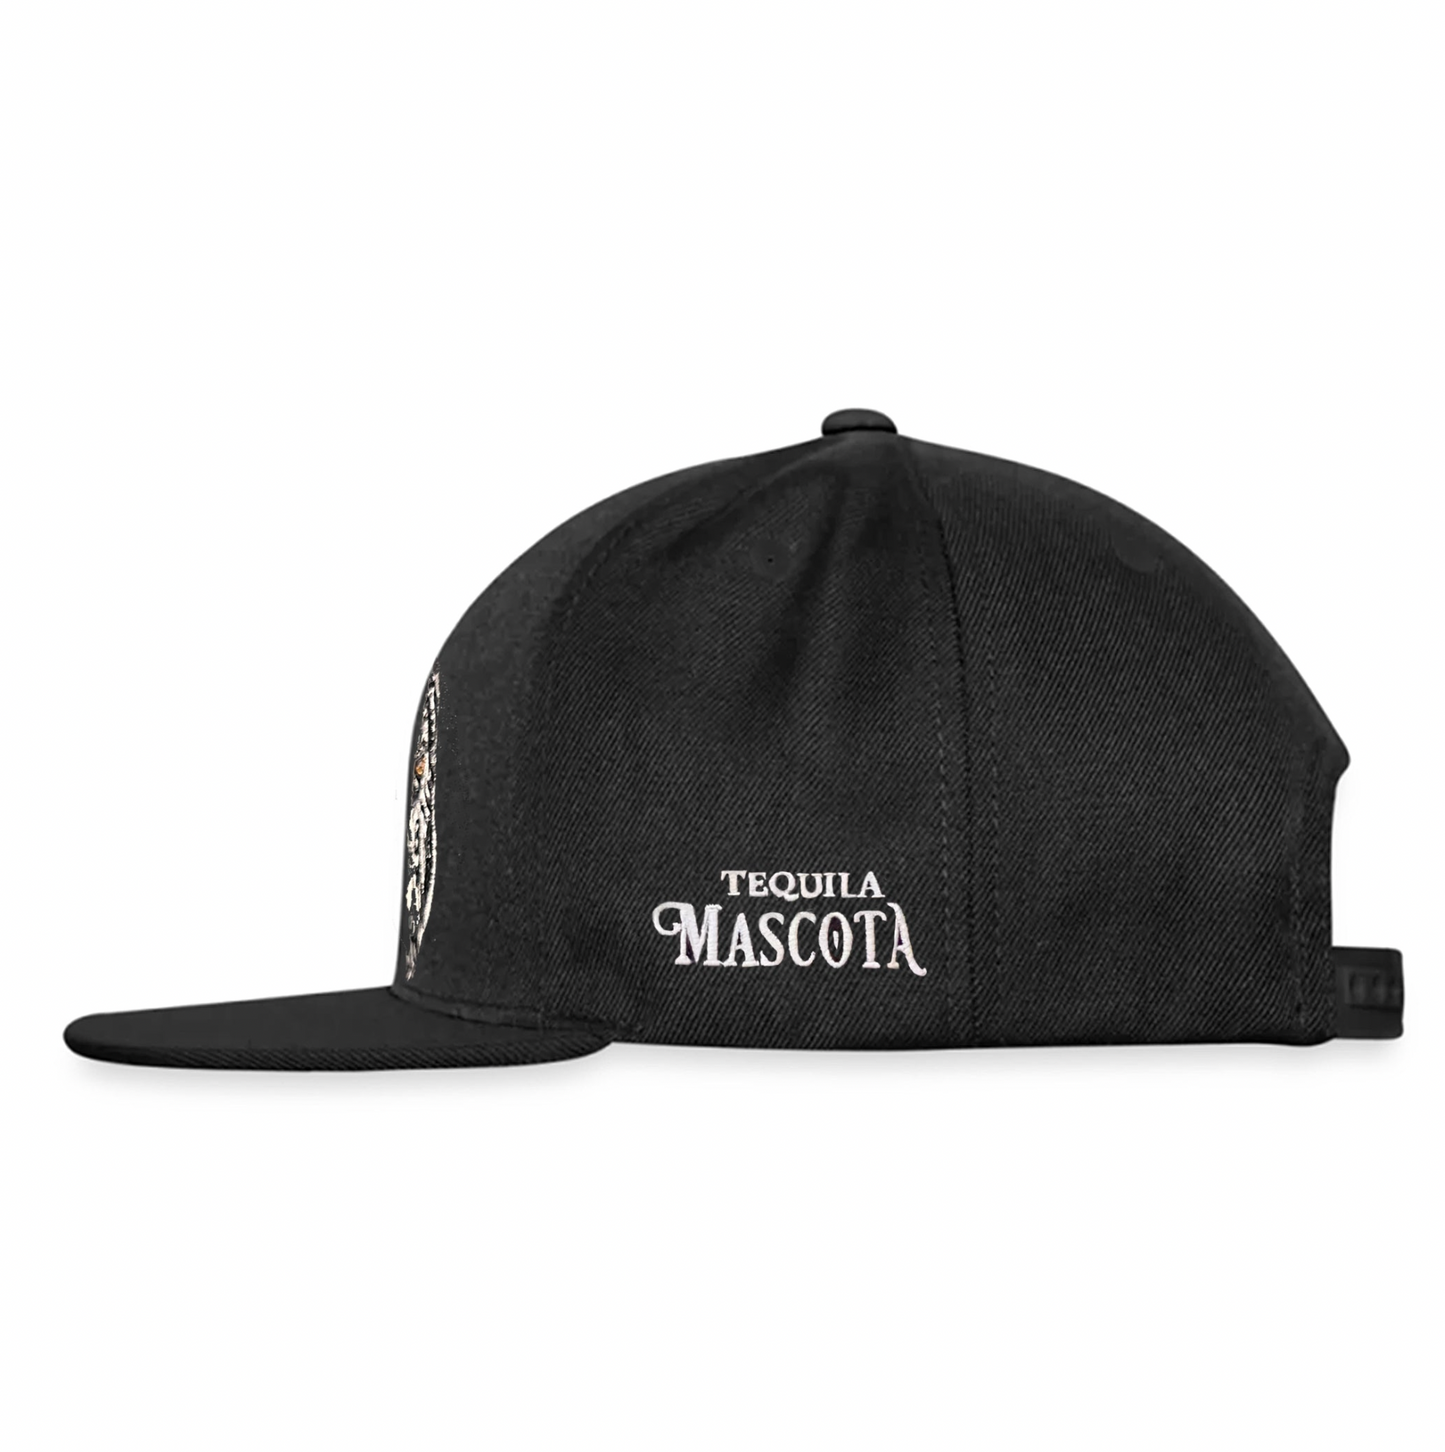 Mascota Tequila Black Snapback Hat